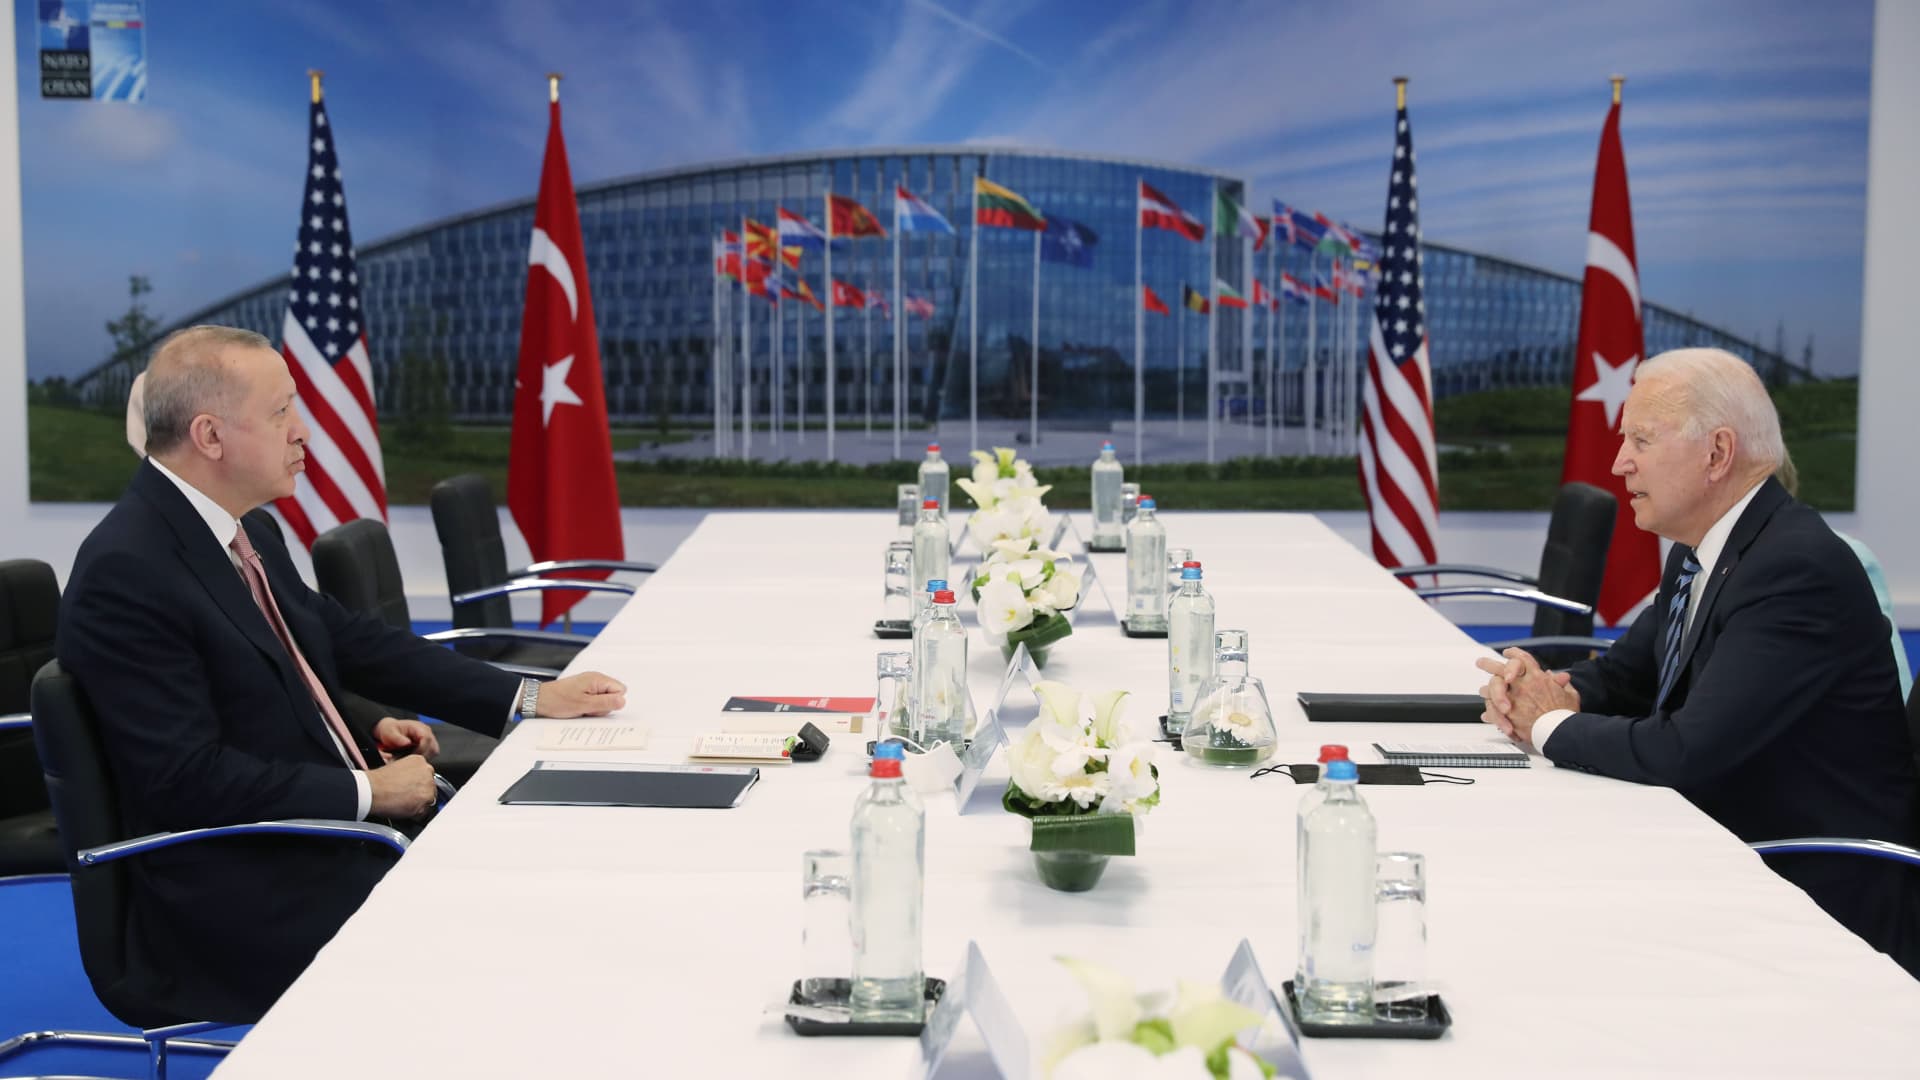 Turkish President Recep Tayyip Erdogan (L) and US President Joe Biden (R) hold a meeting at the NATO summit at the North Atlantic Treaty Organization (NATO) headquarters in Brussels, on June 14, 2021.